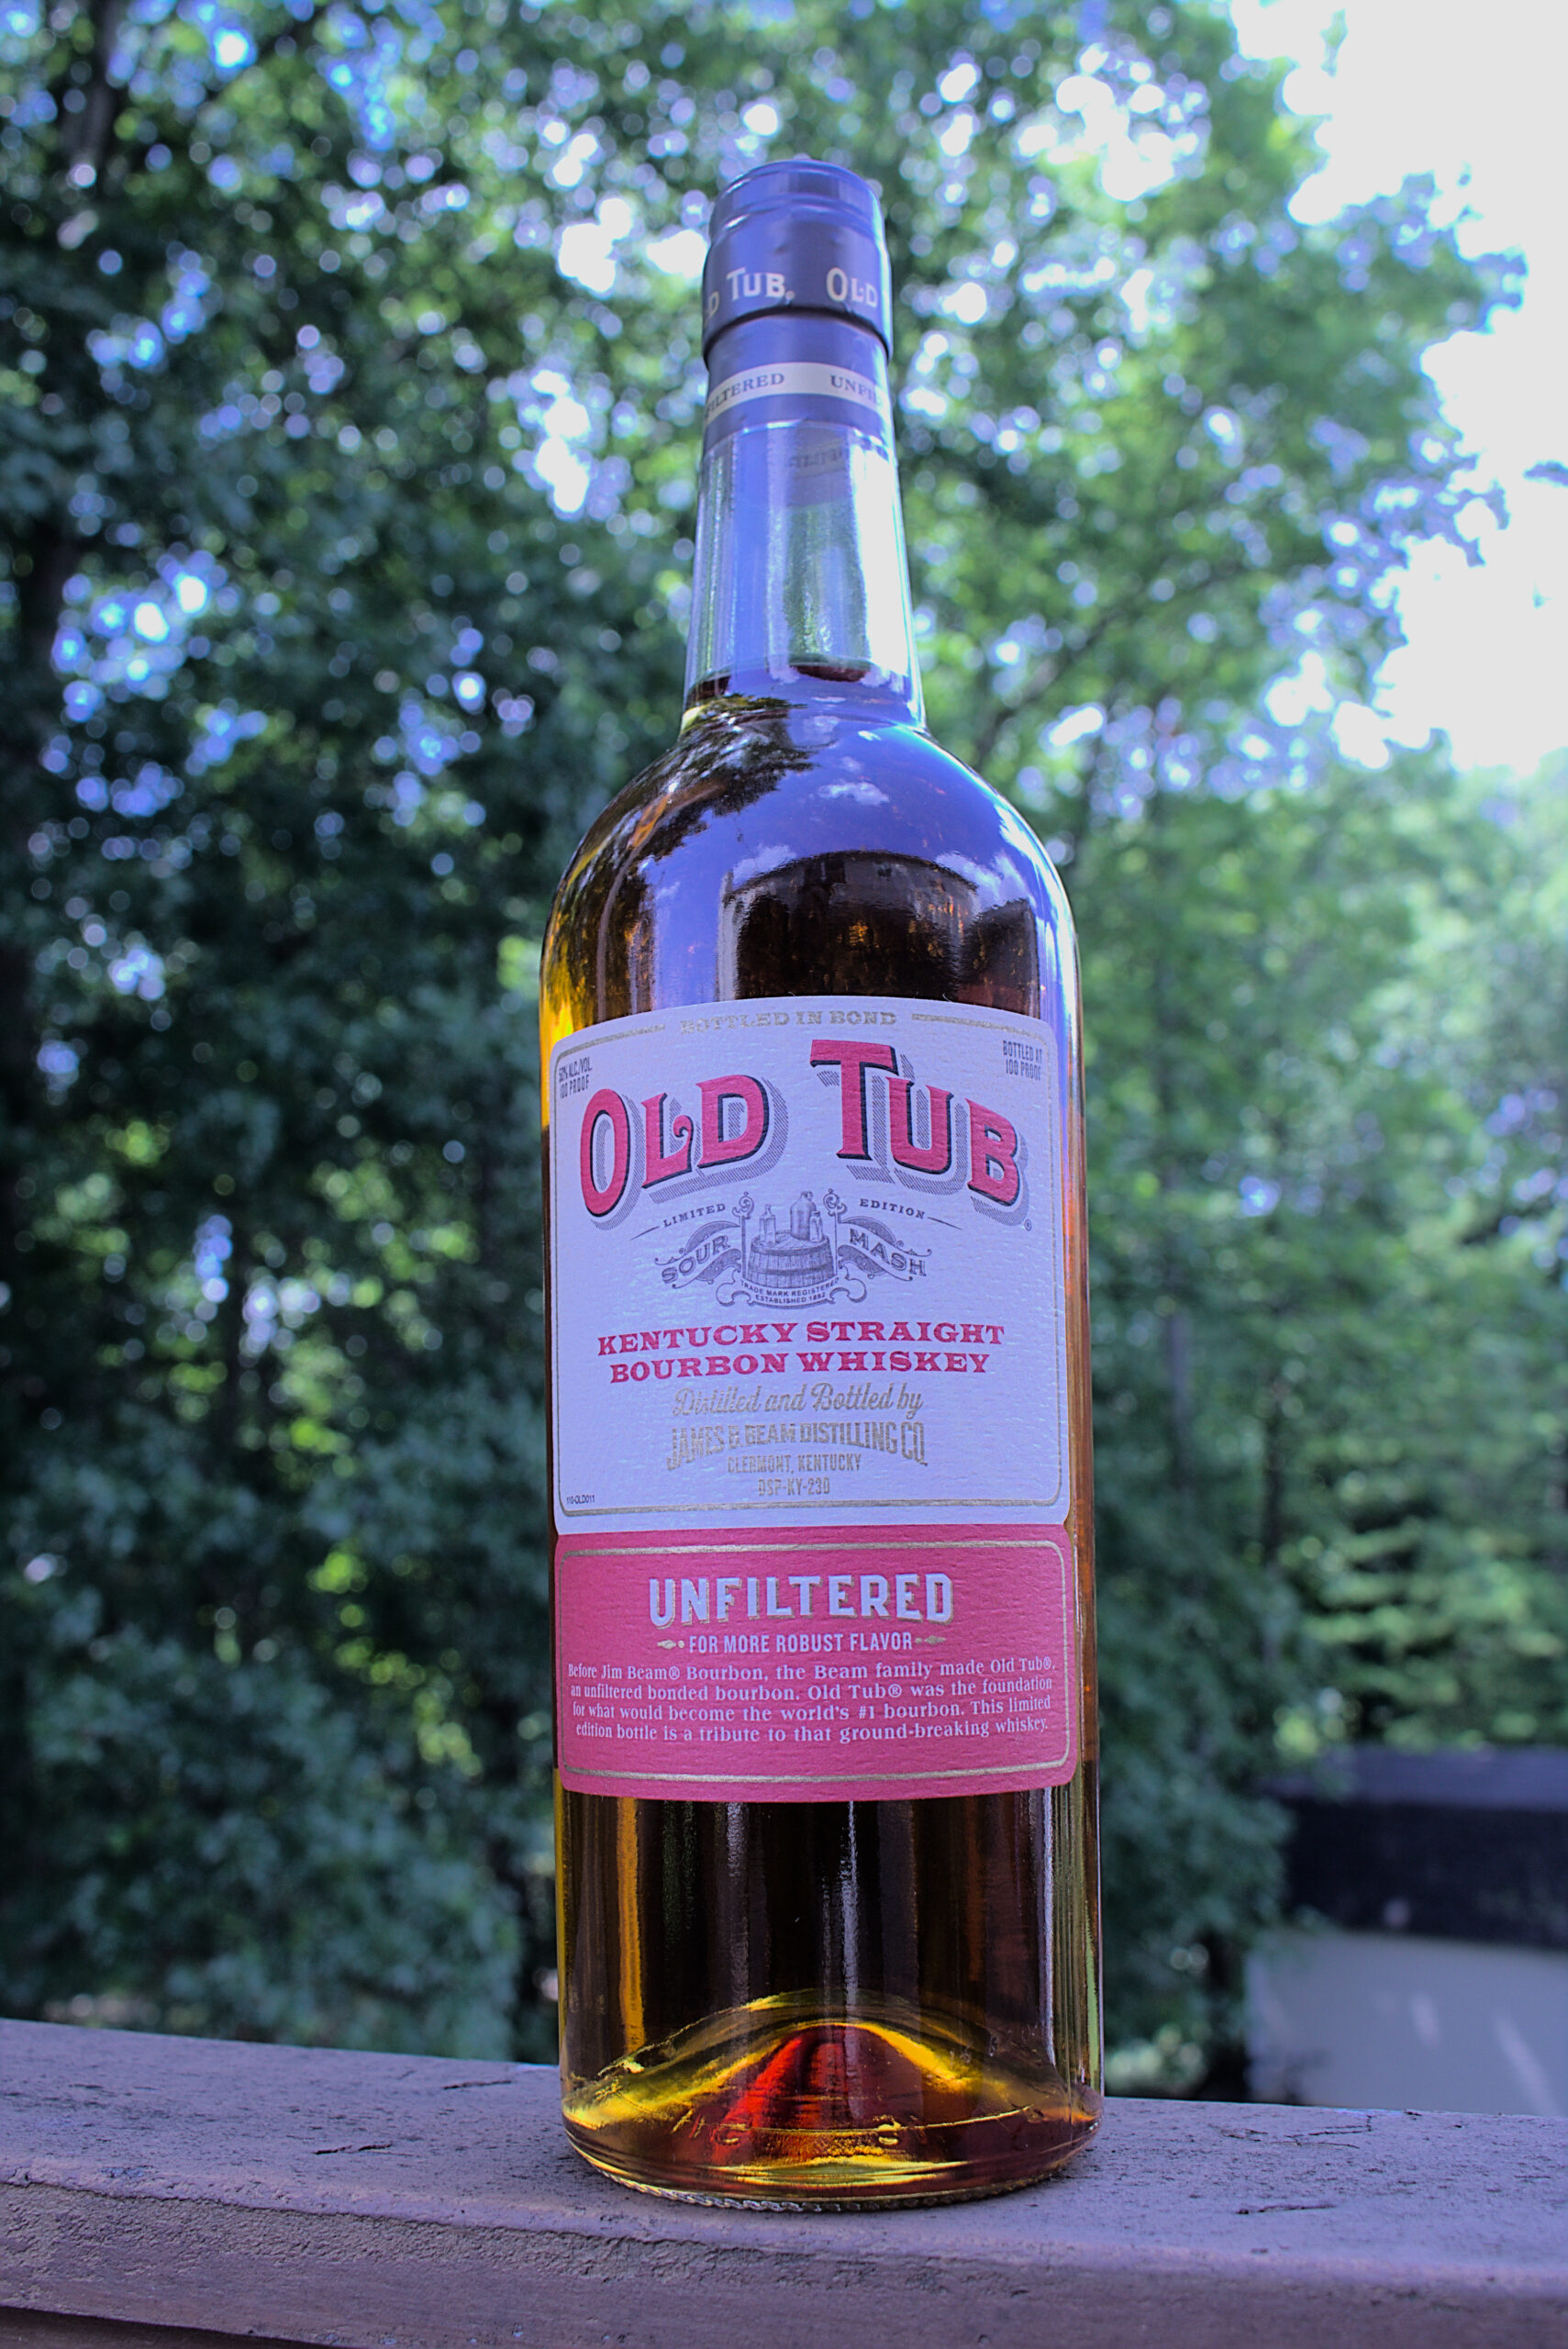 Old Tub Bourbon Bottle